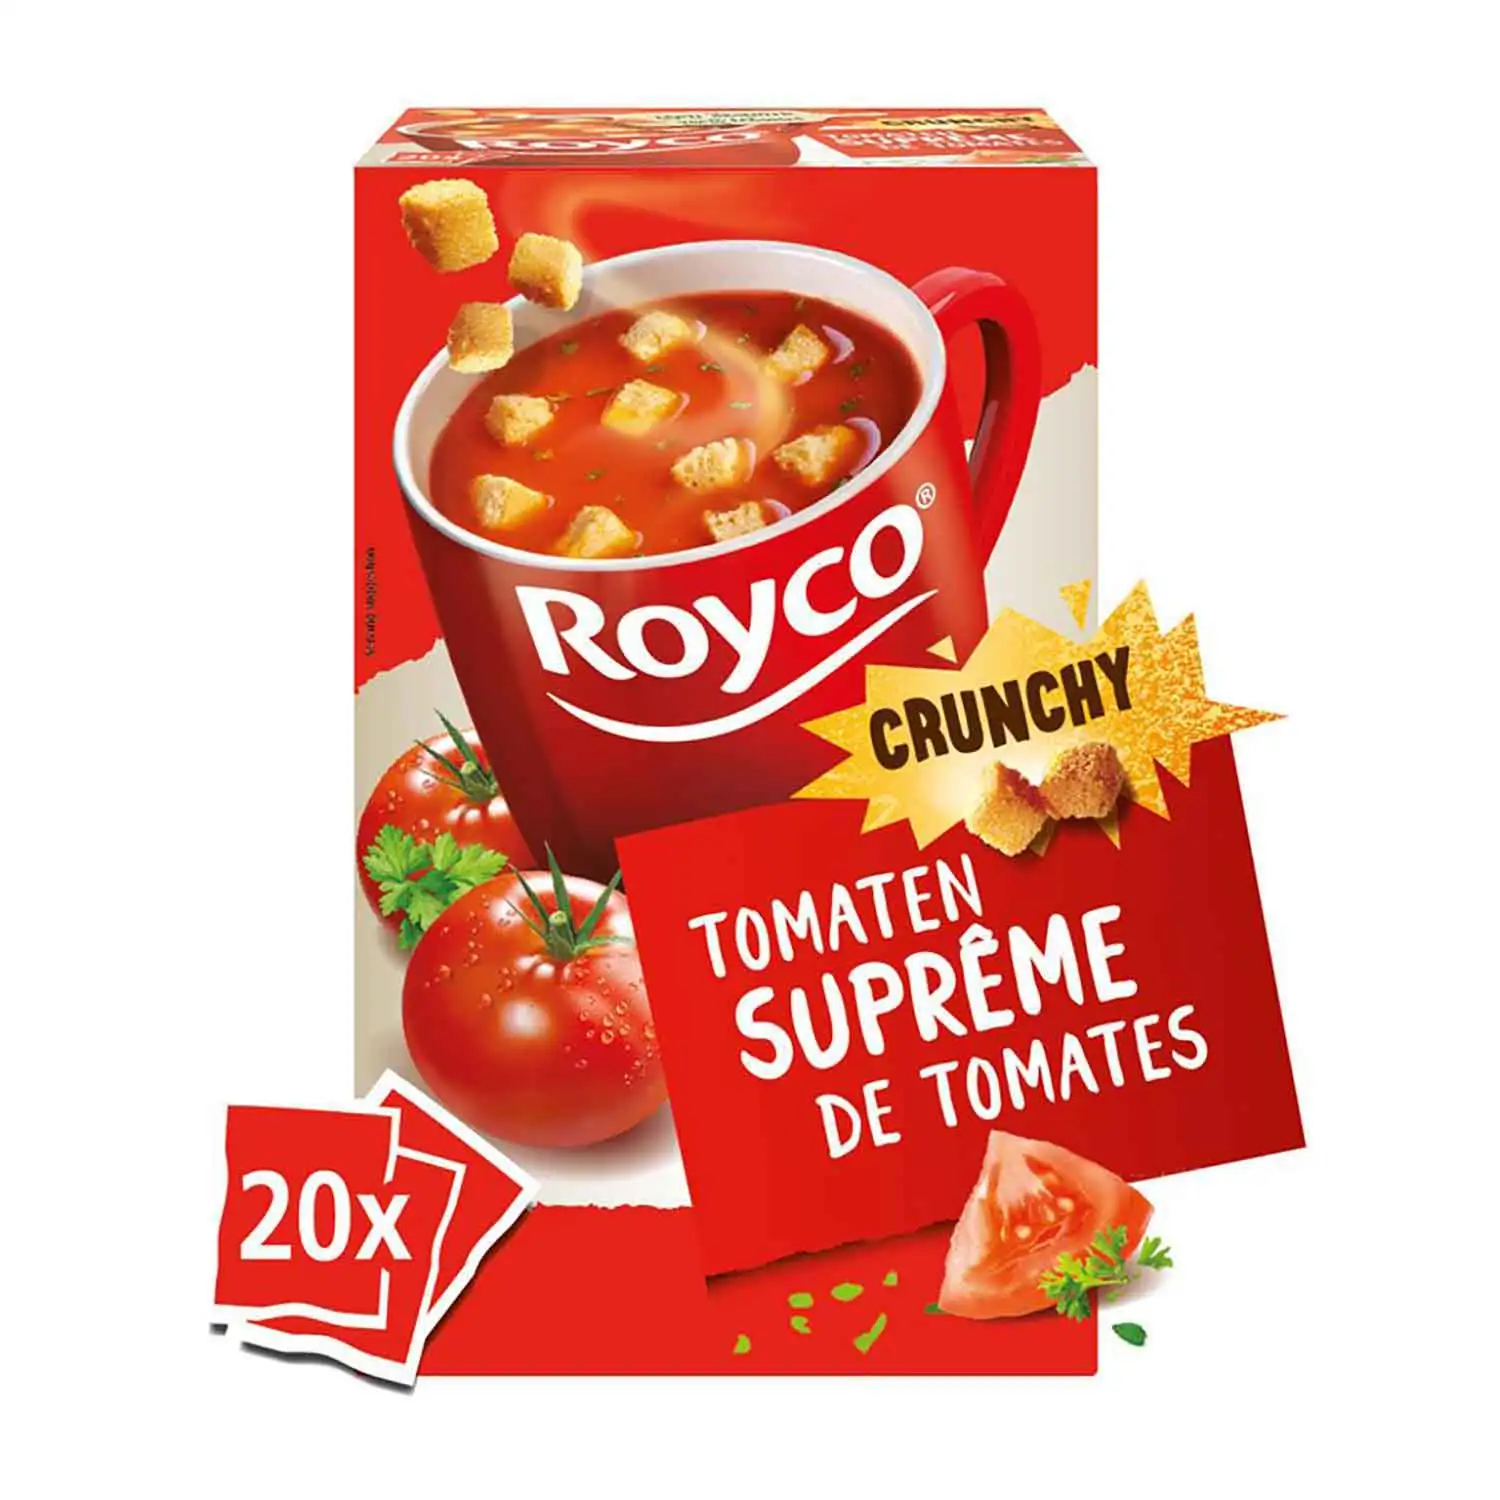 20x Royco crunchy suprême tomates 20,7g - Buy at Real Tobacco